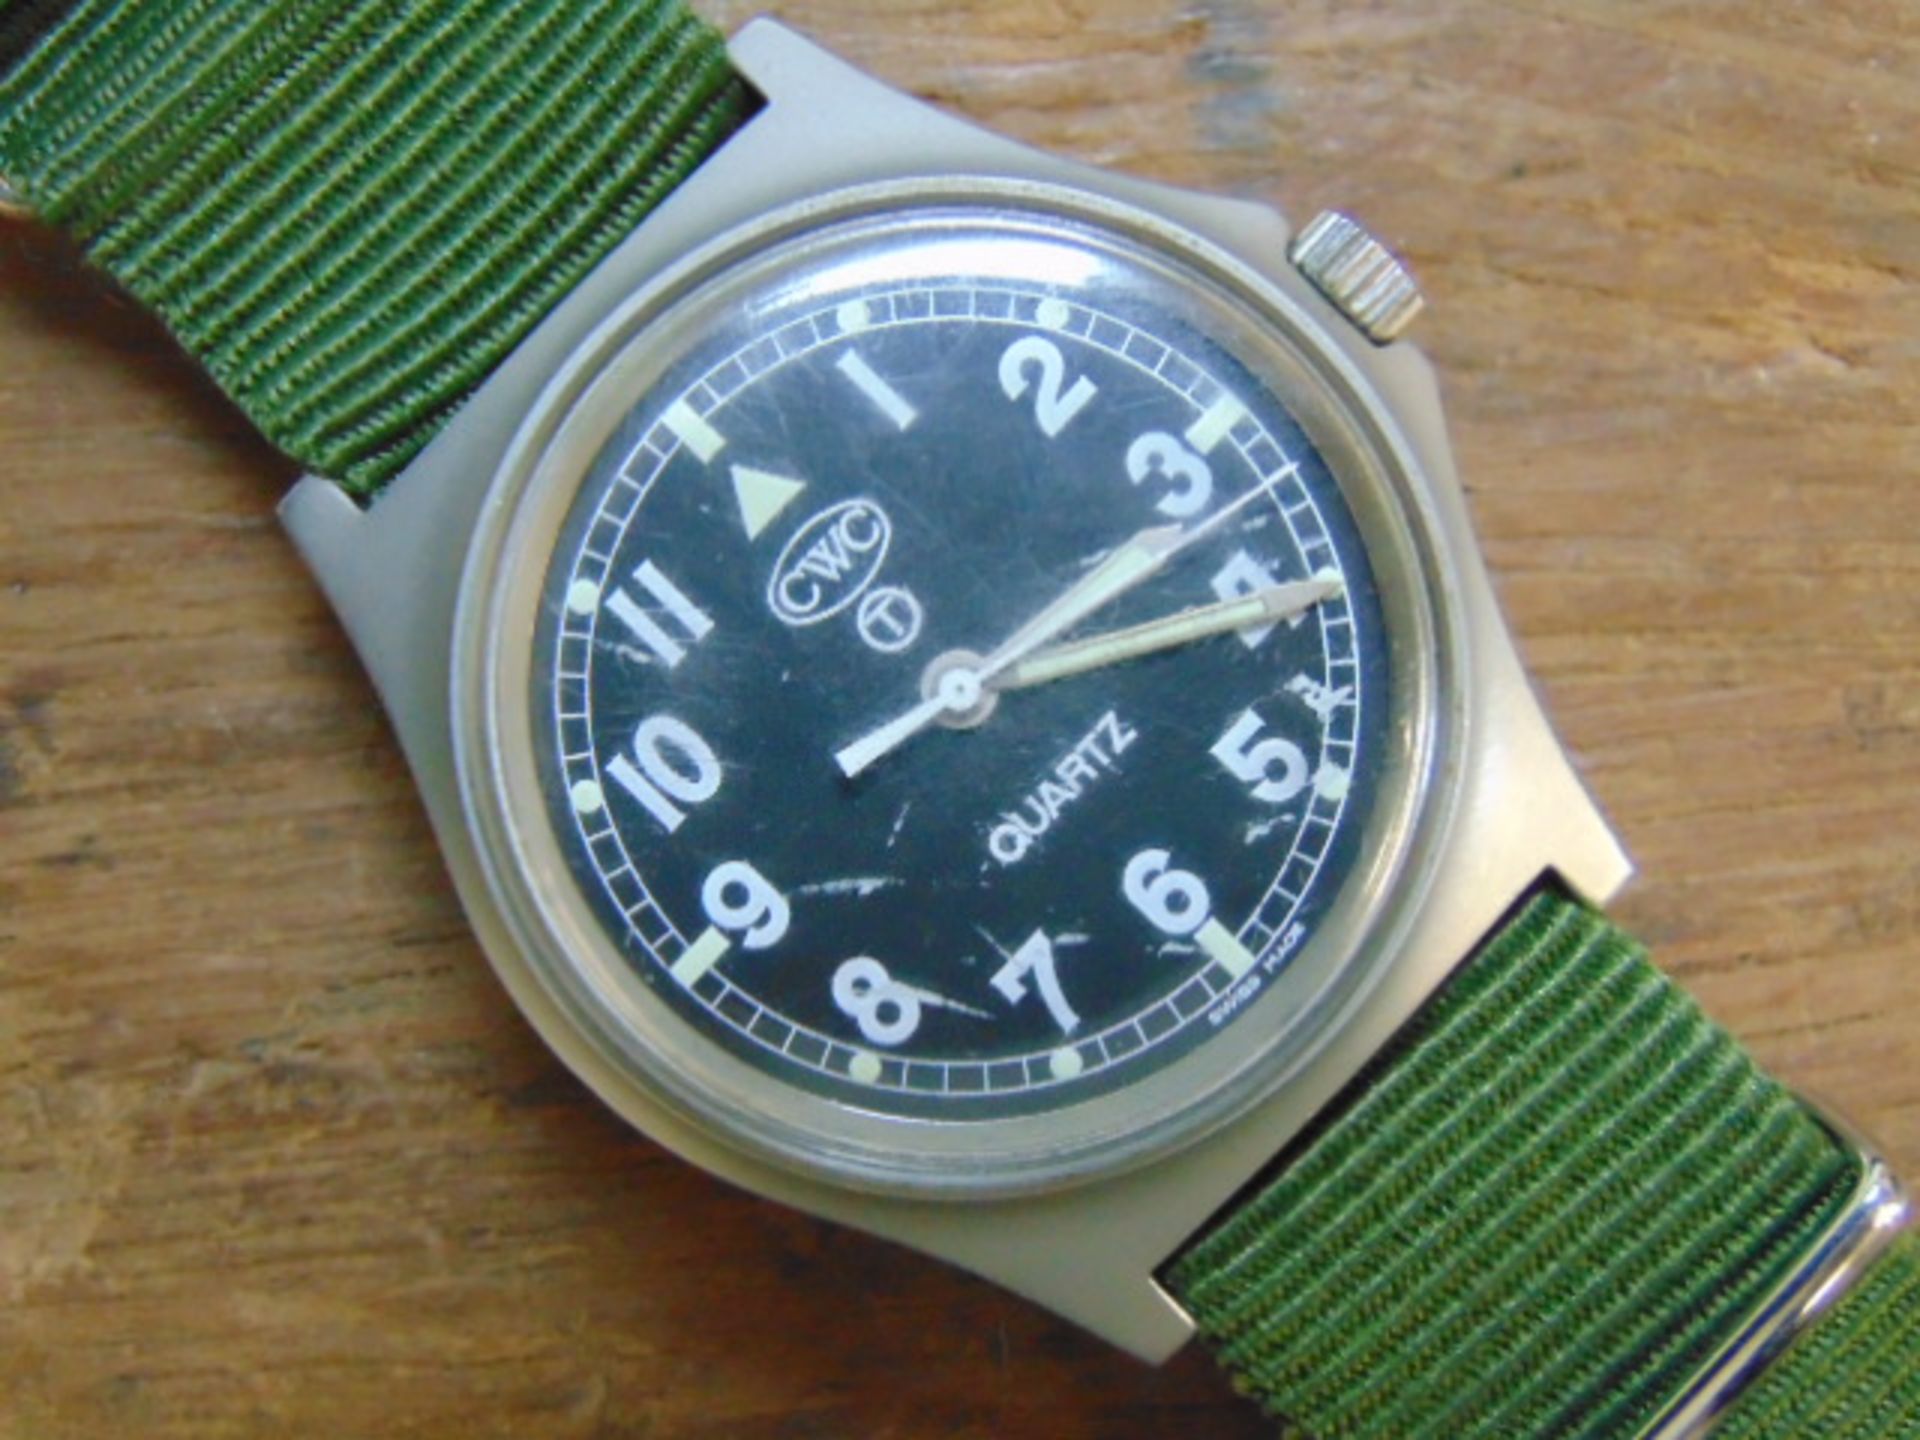 Genuine British Army, CWC Quartz Wrist Watch